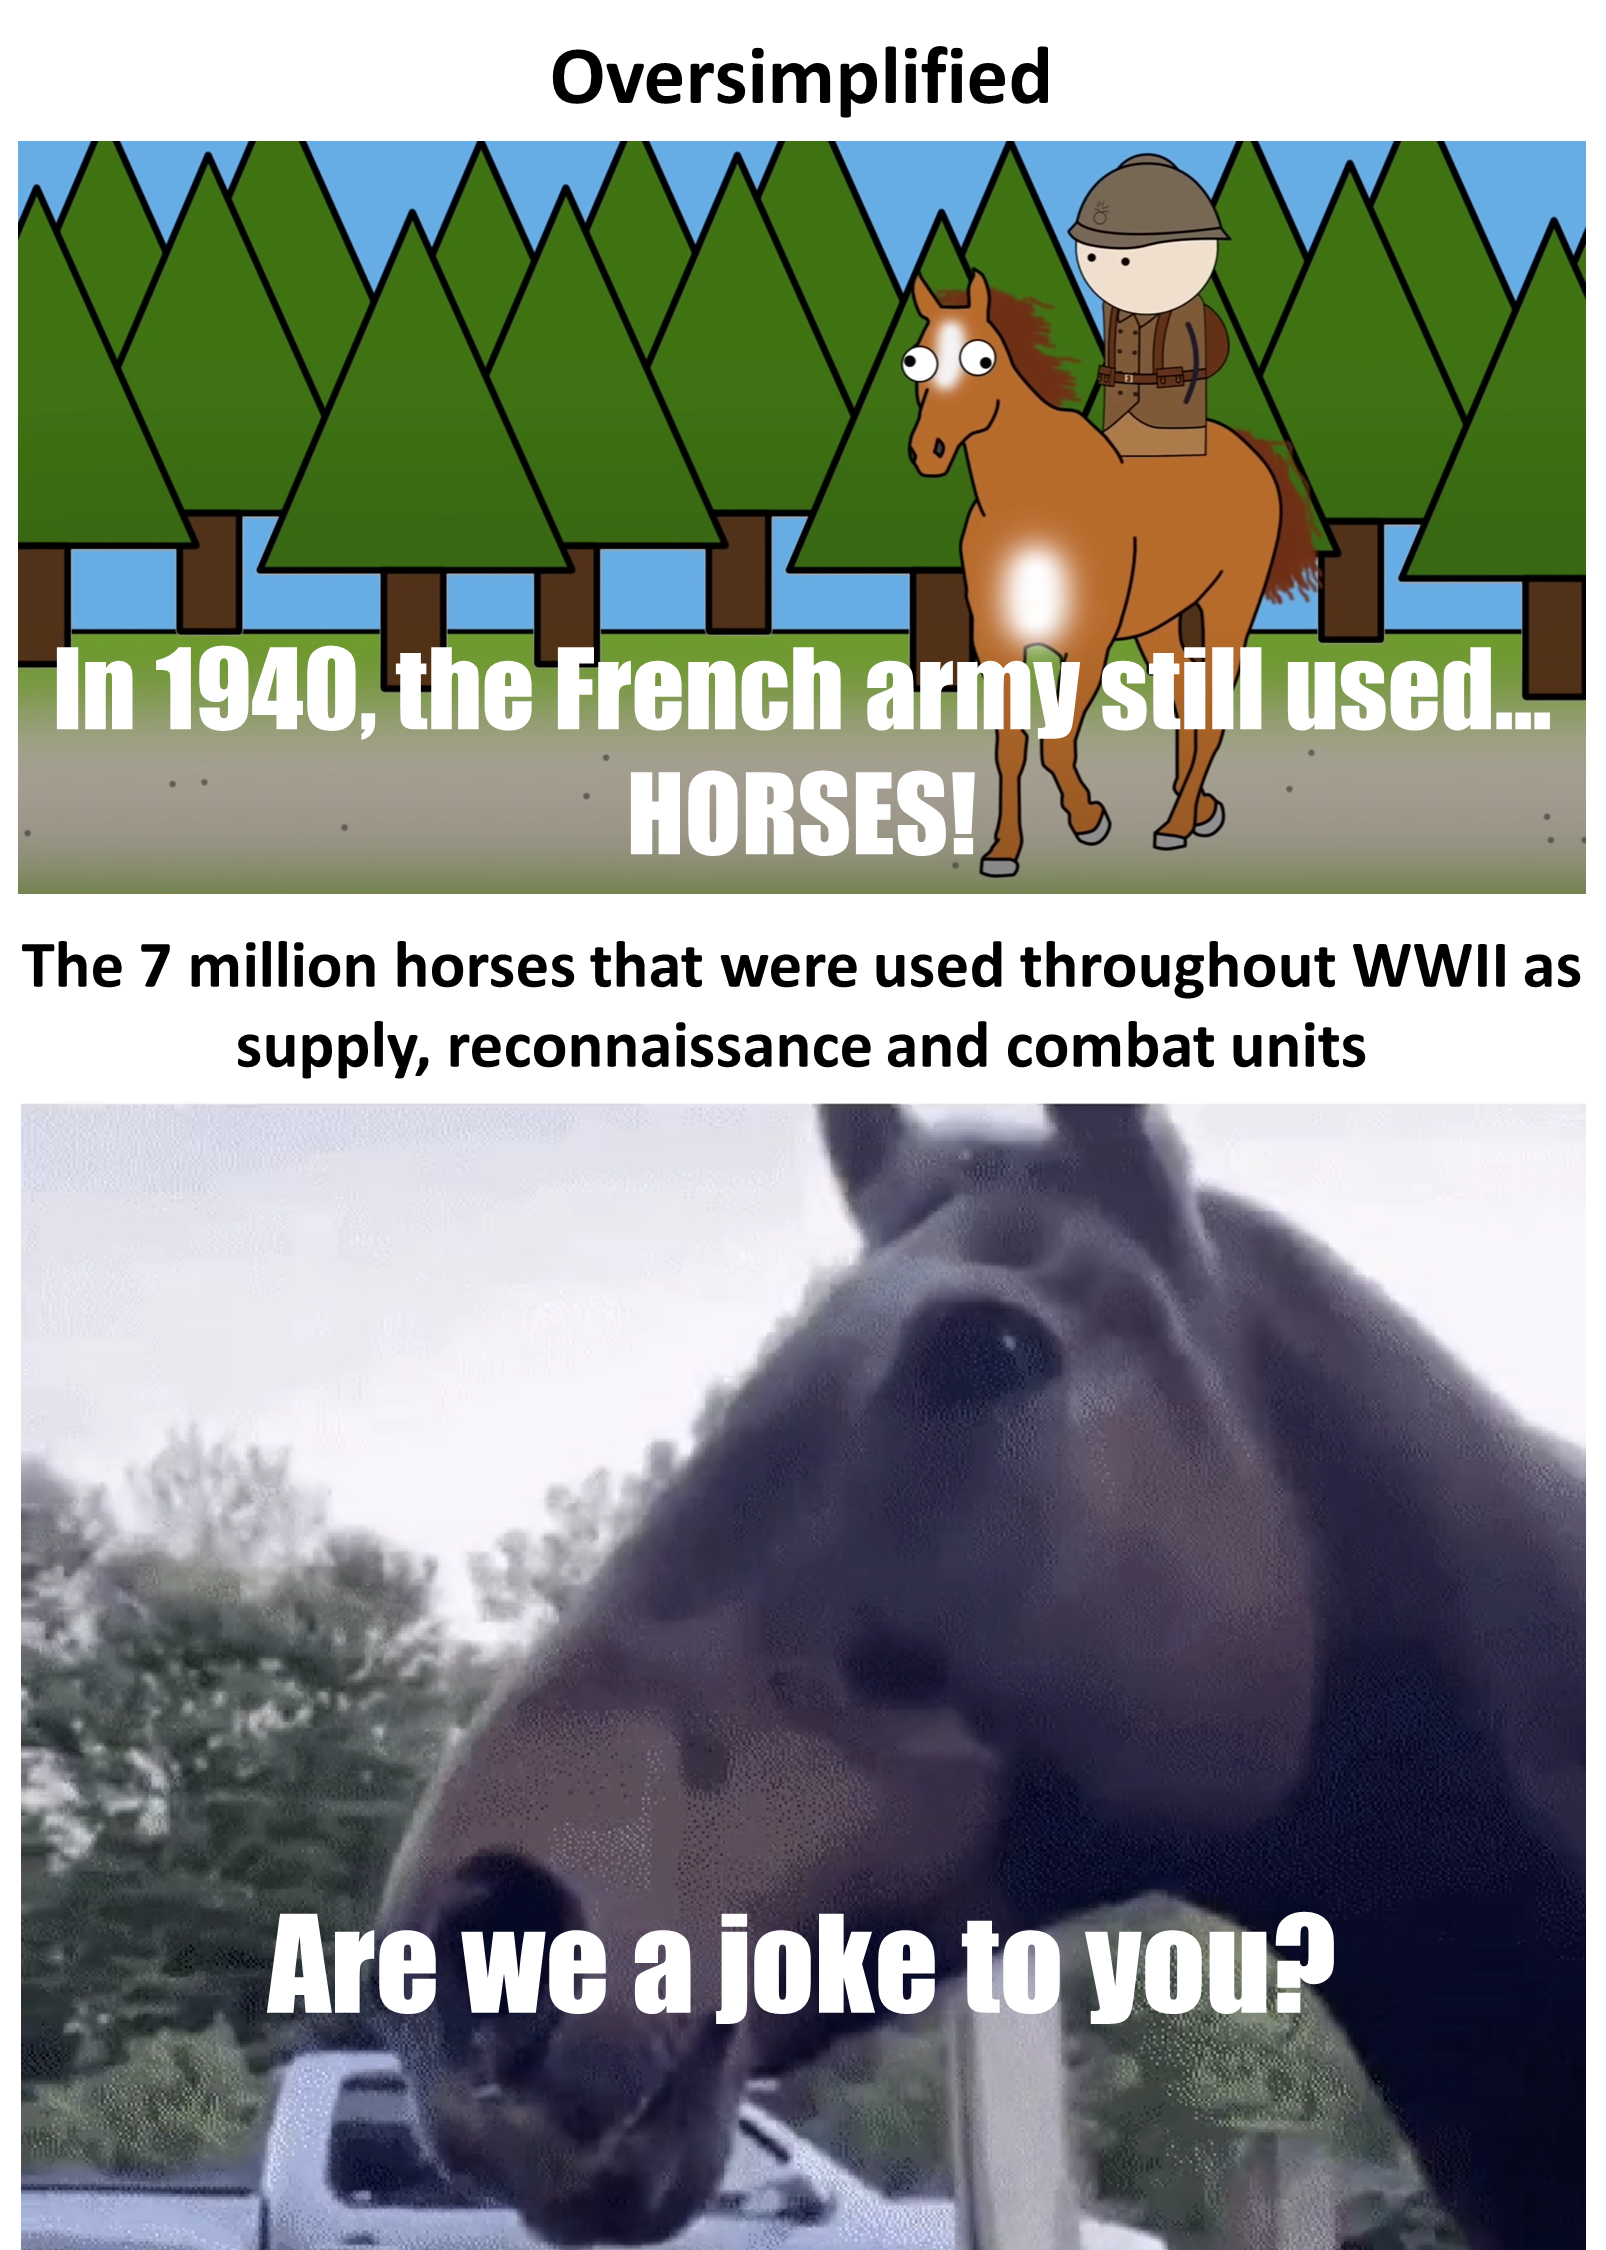 War horses were still a thing back then...